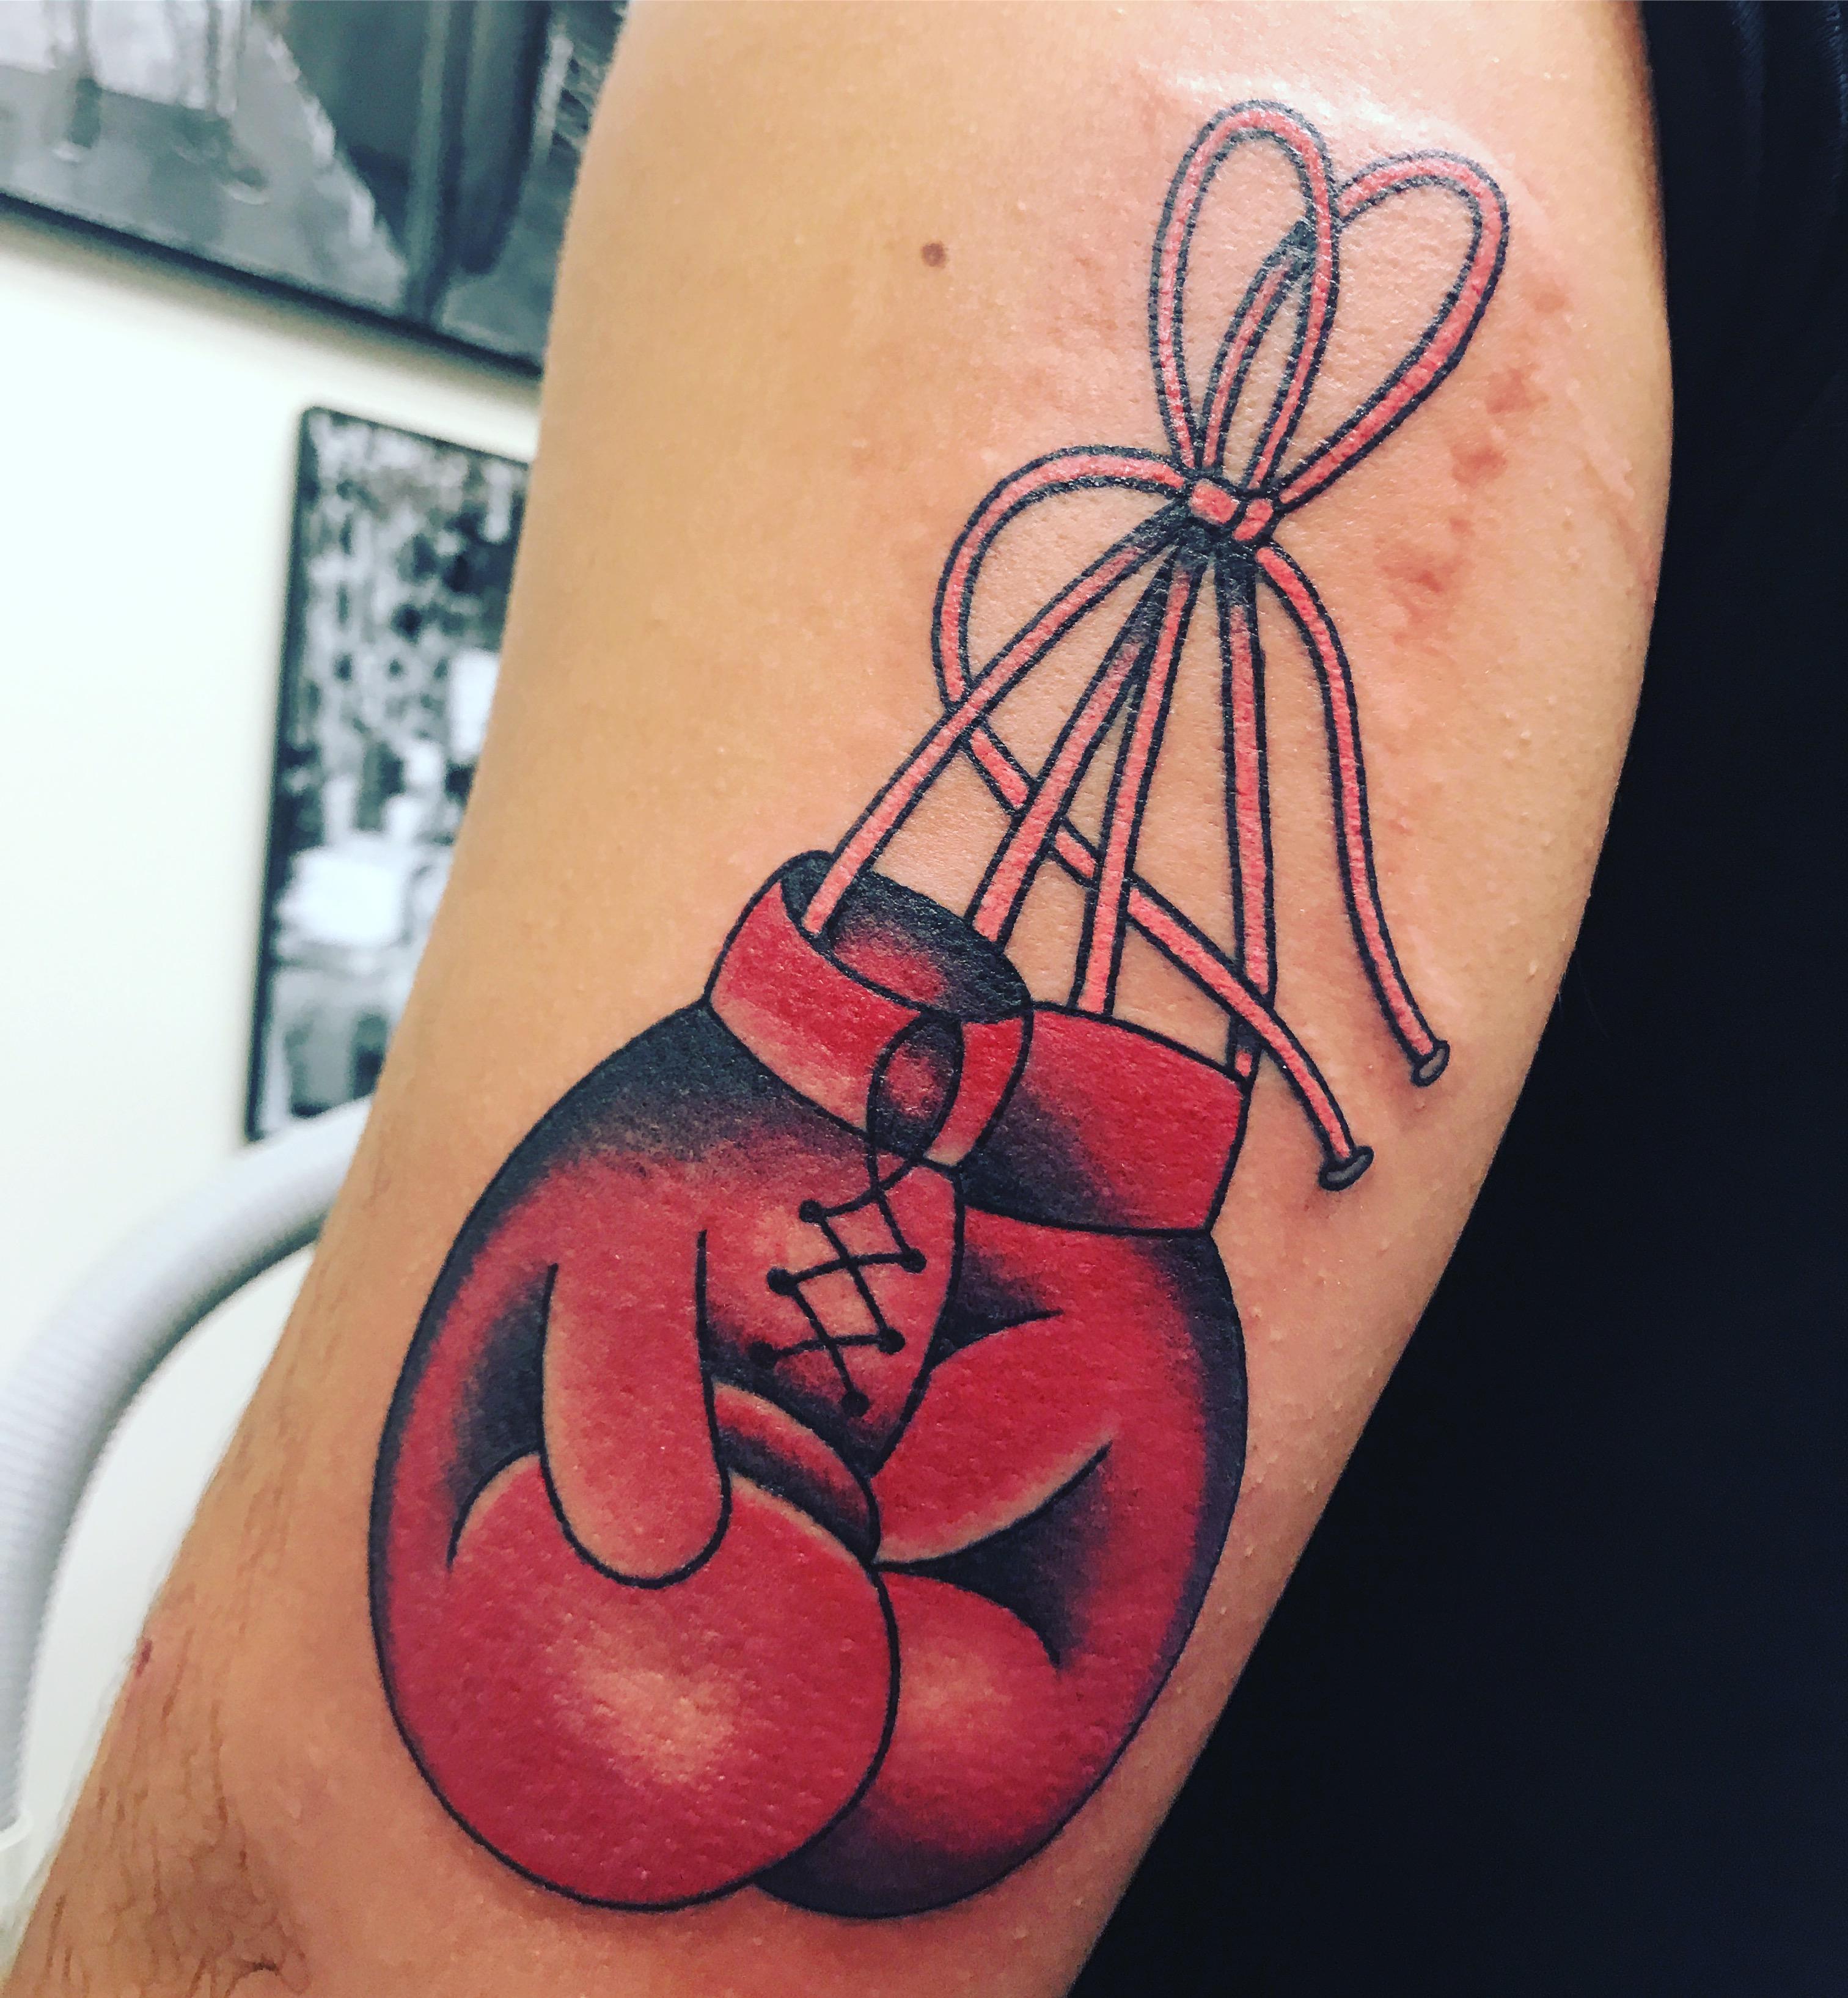 caden bell add boxing glove tattoo photo